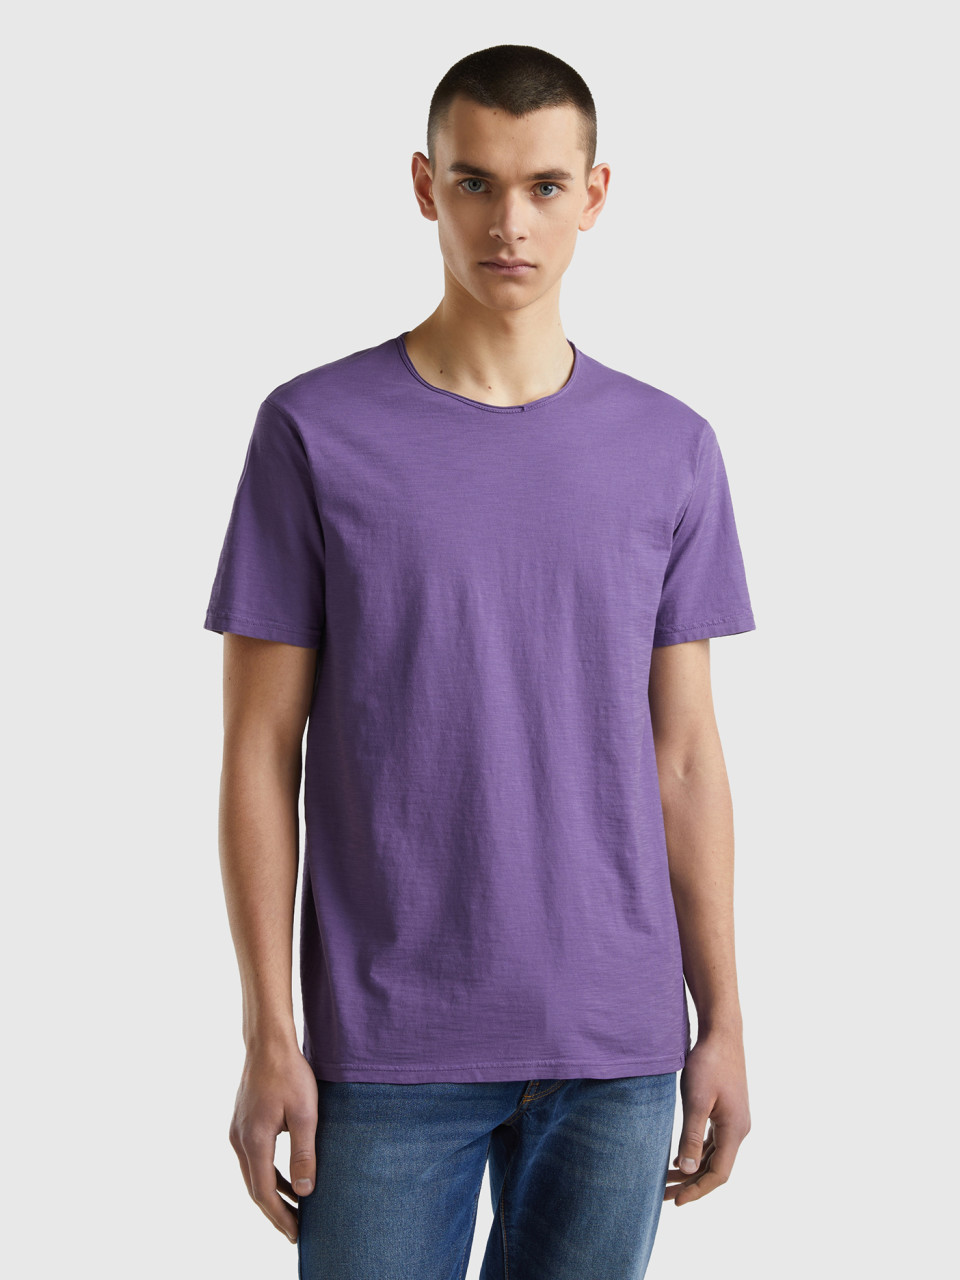 Benetton, Purple T-shirt In Slub Cotton, Violet, Men